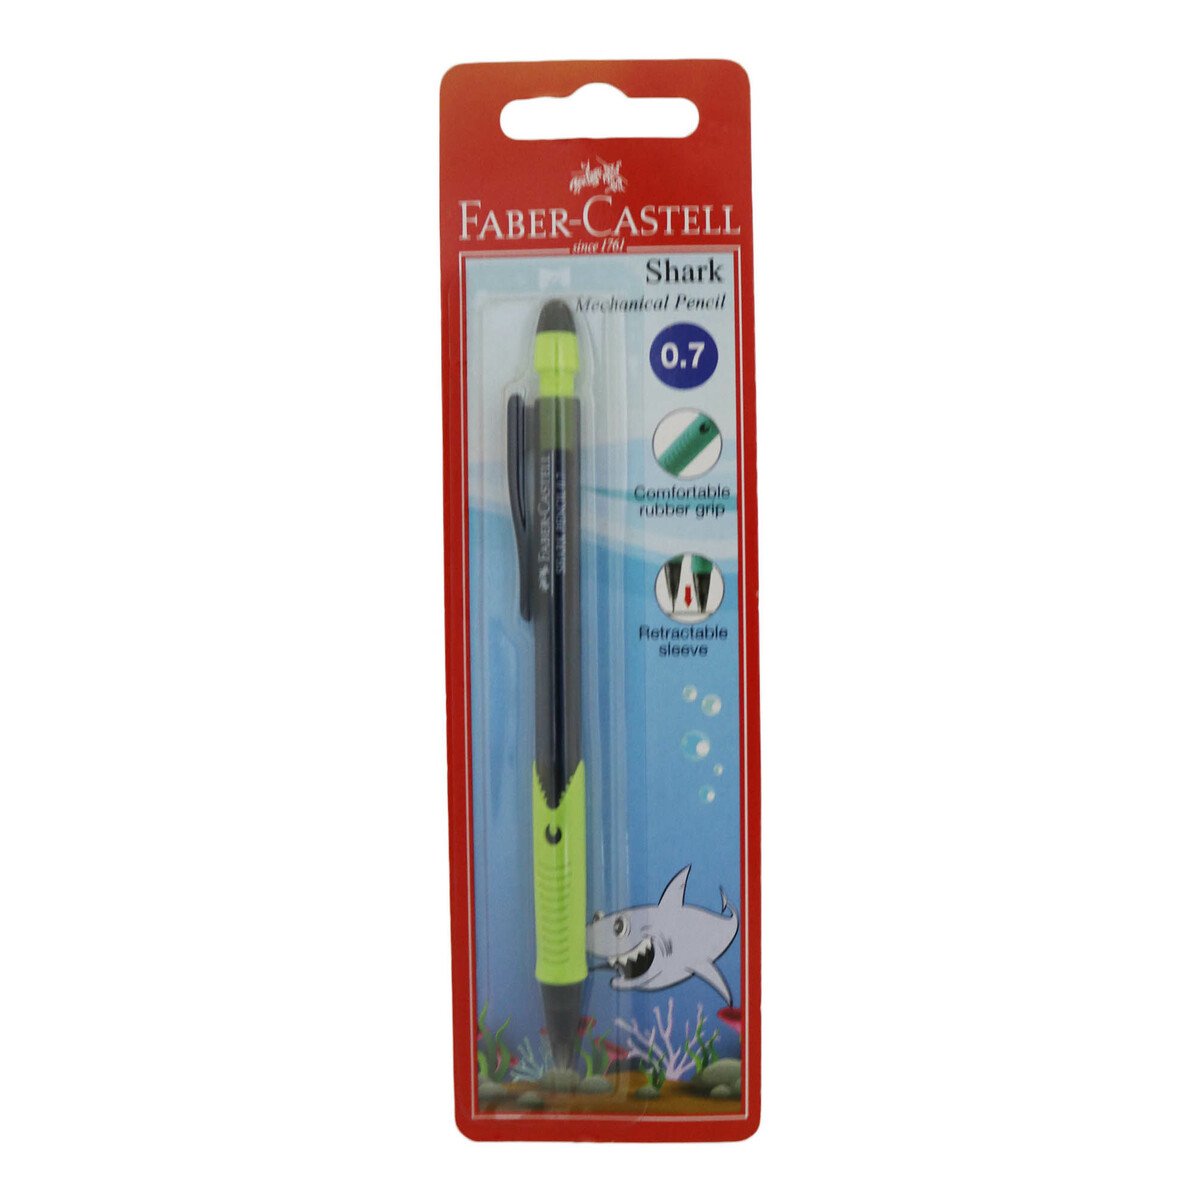 Faber Castell Shark Pencil 130002 0.7 1pcs